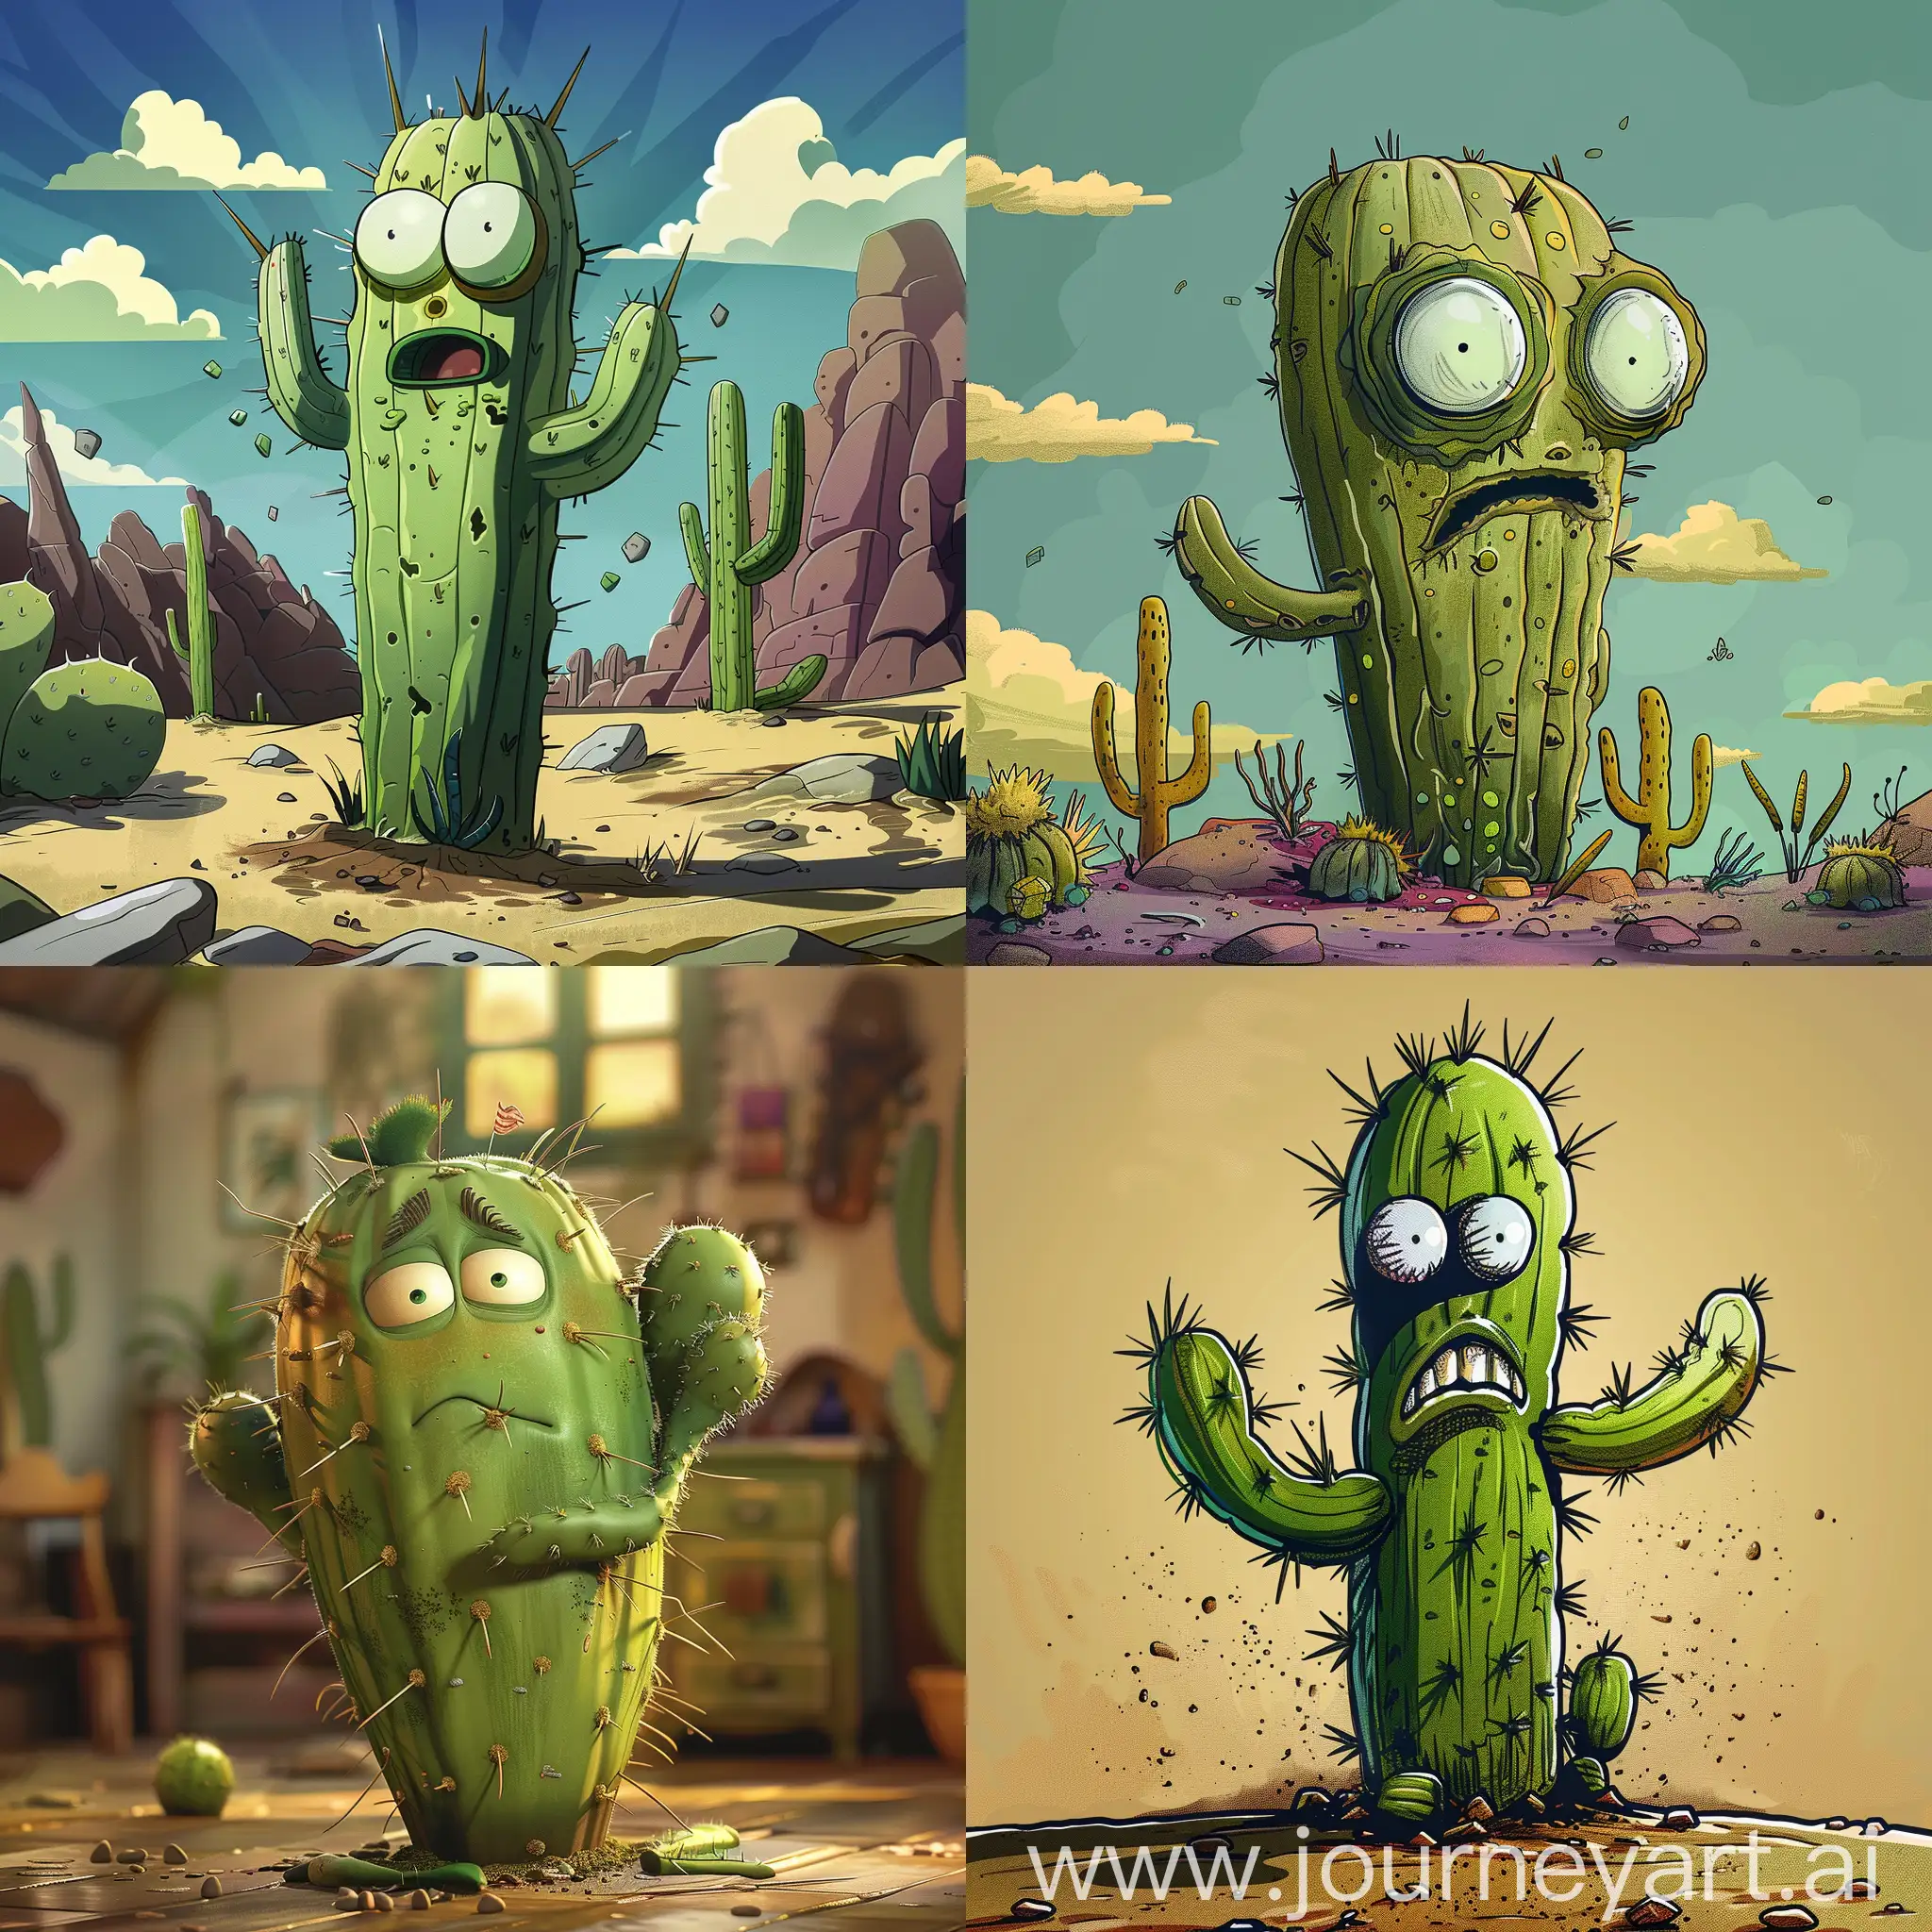 Whimsical-Cartoon-Cactus-World-A-Soft-Alternative-Reality